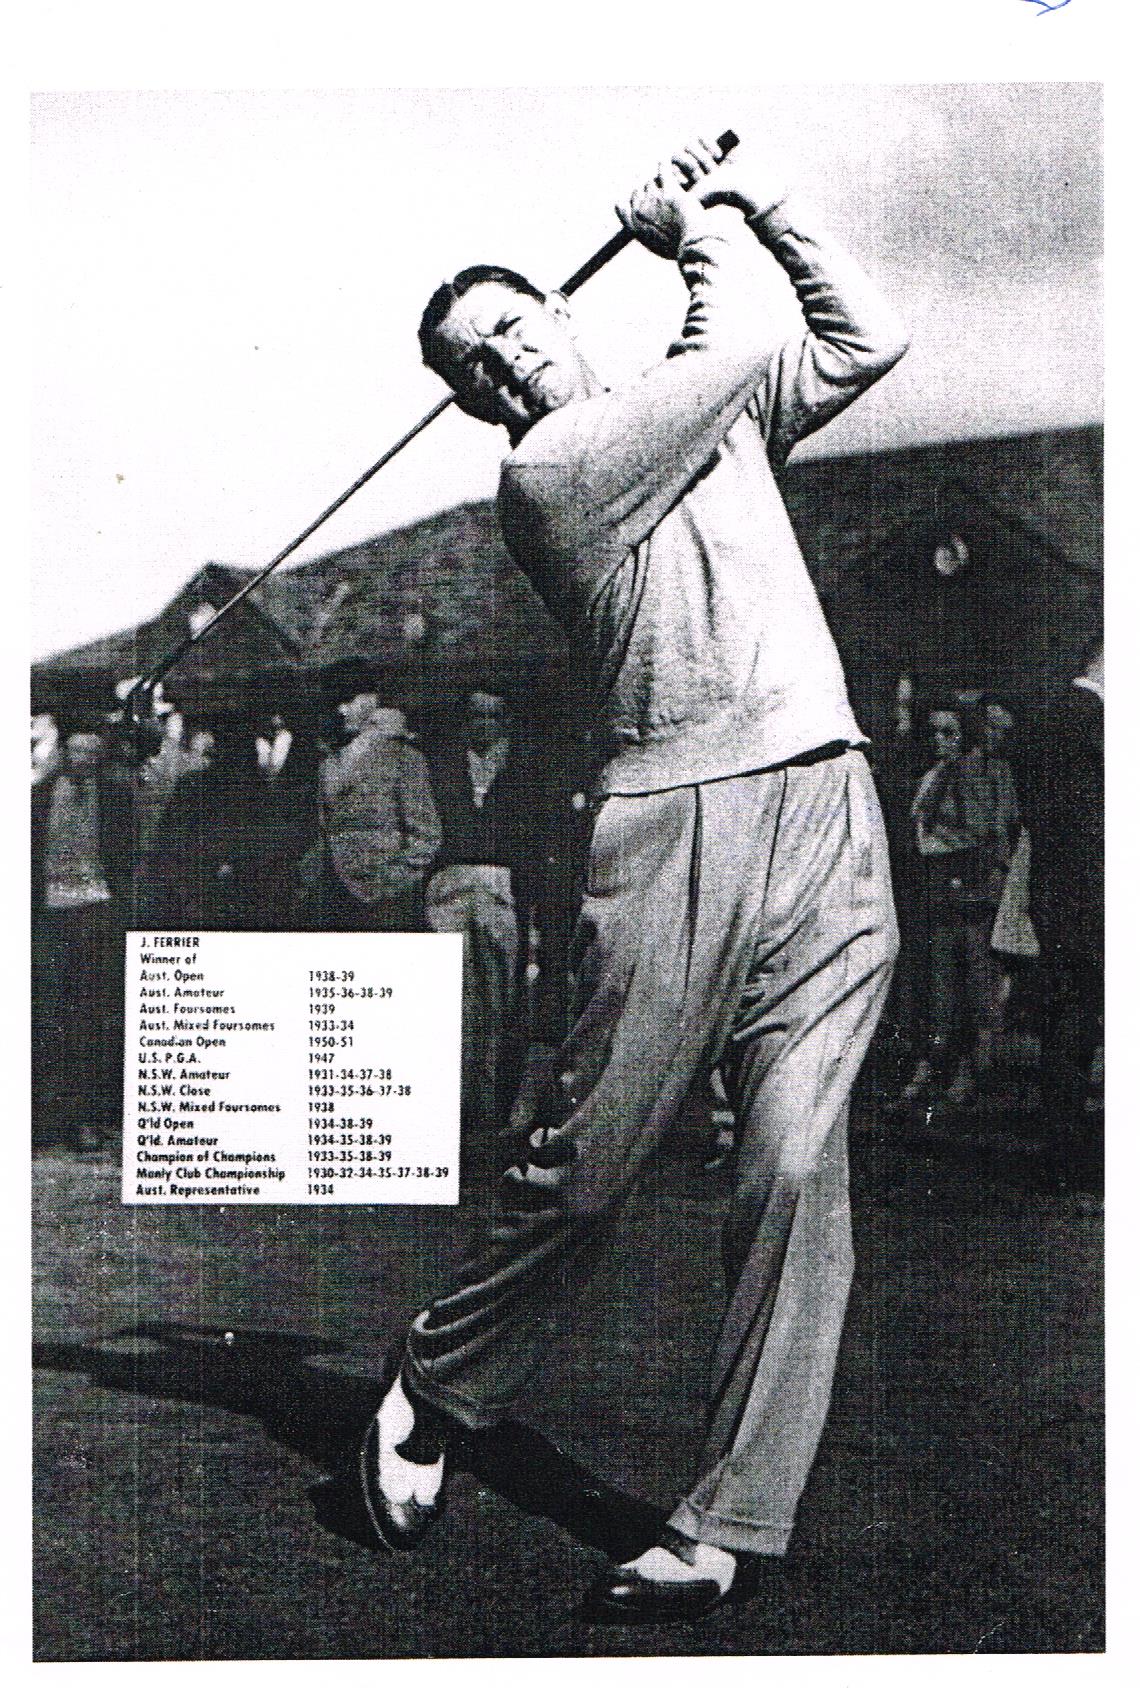 Jim Ferrier at Manly Golf Club